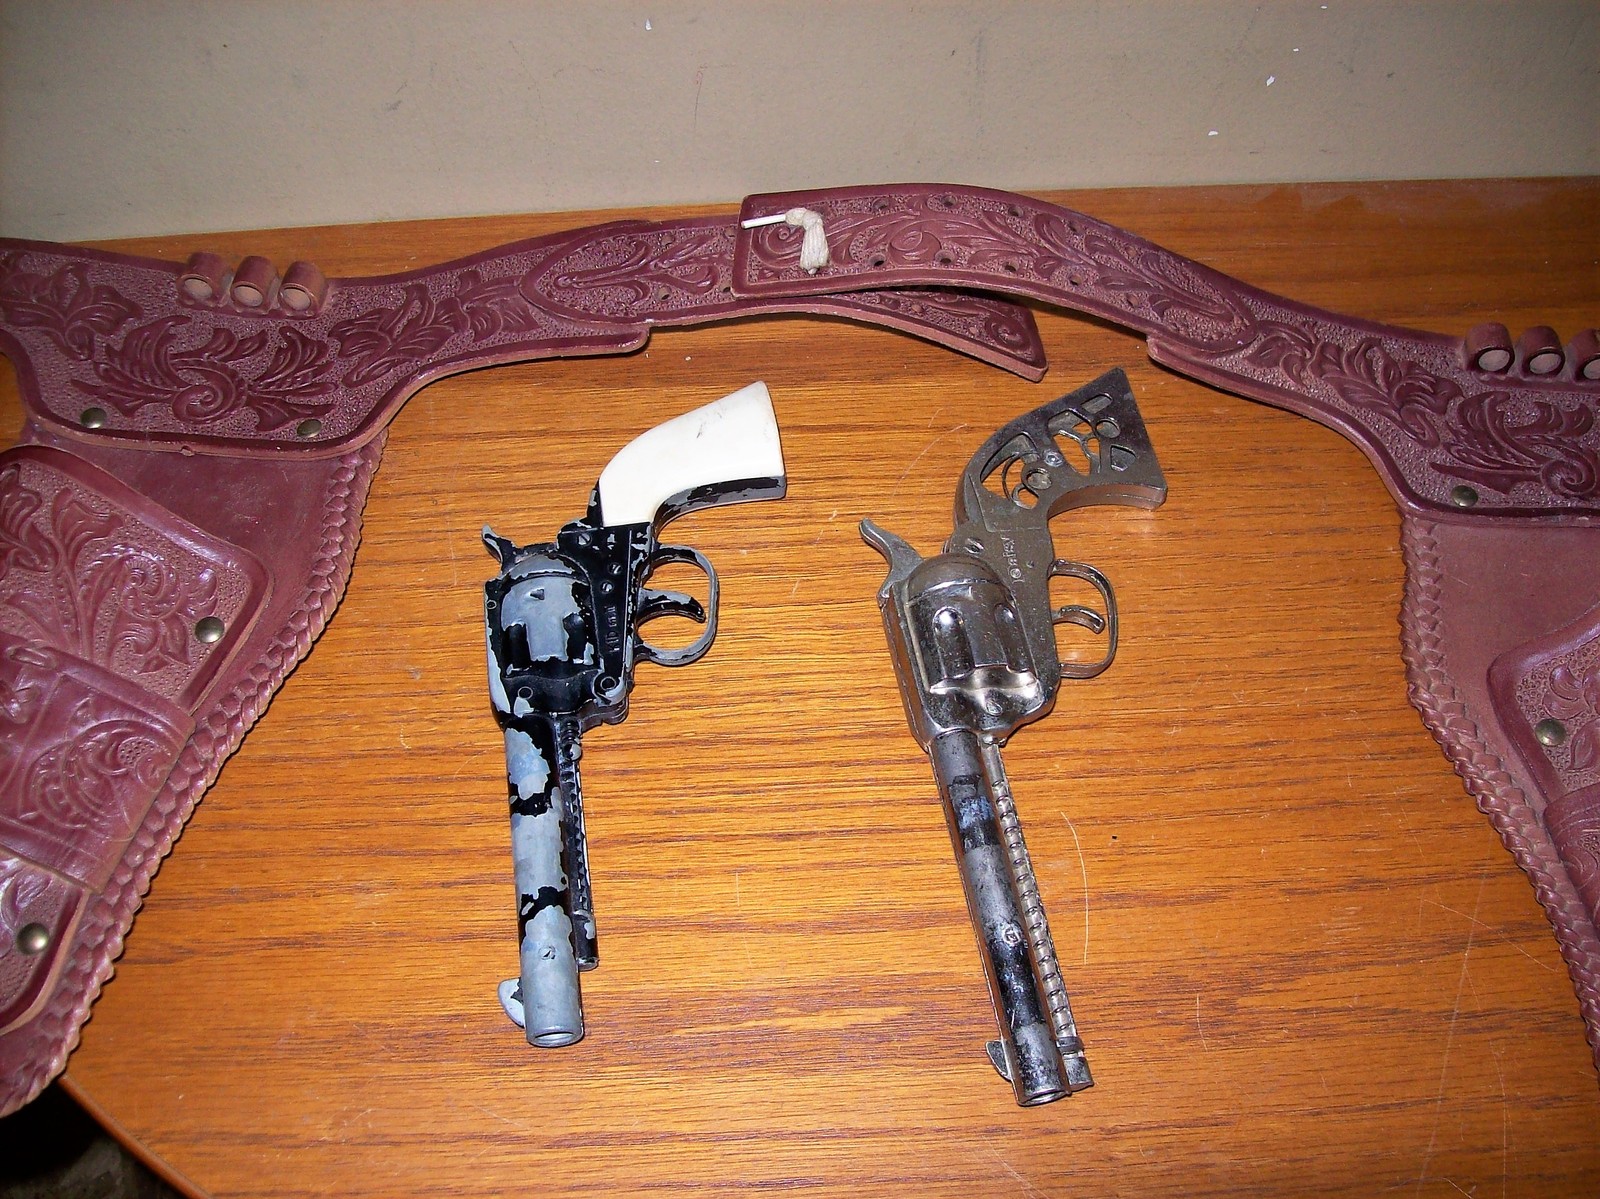 2 Pieces 38 Special Black Plastic 8 Shot Cap Gun Pistol Boys Play Toy Guns New - pistol mesh roblox